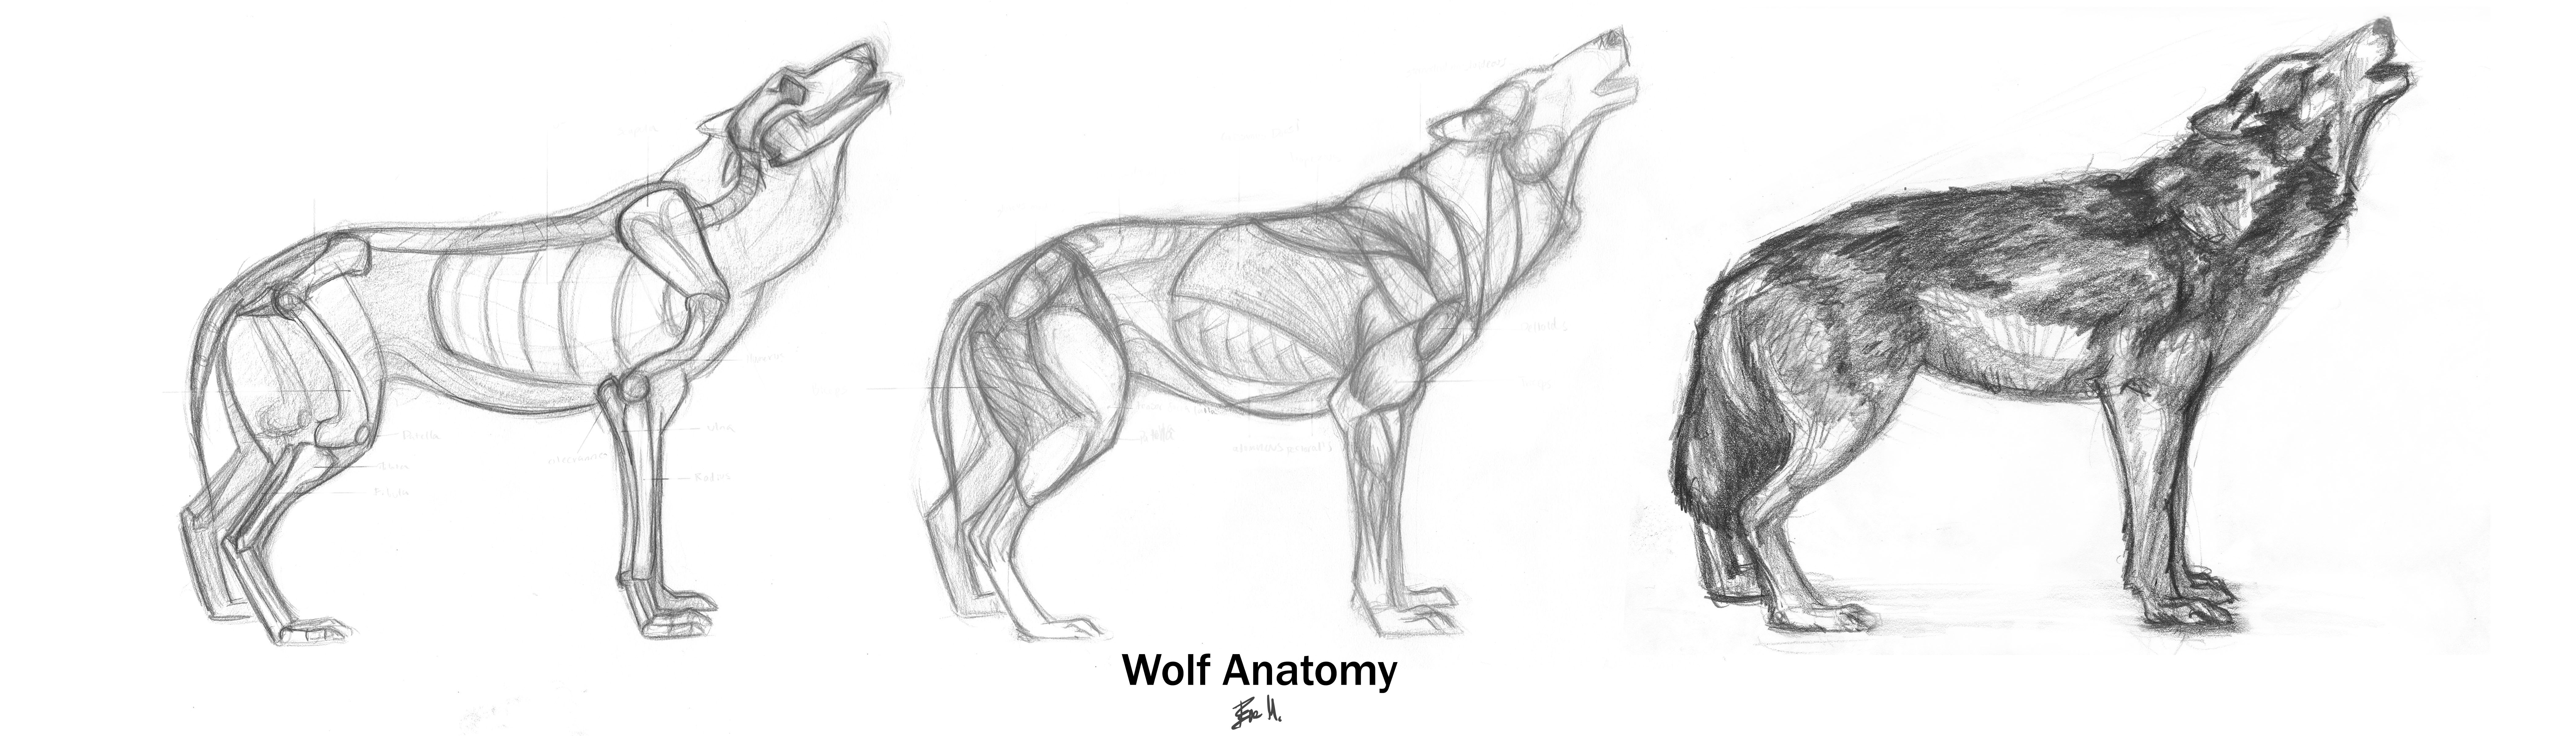 Animal Anatomy: Wolf by 89ravenclaw on DeviantArt